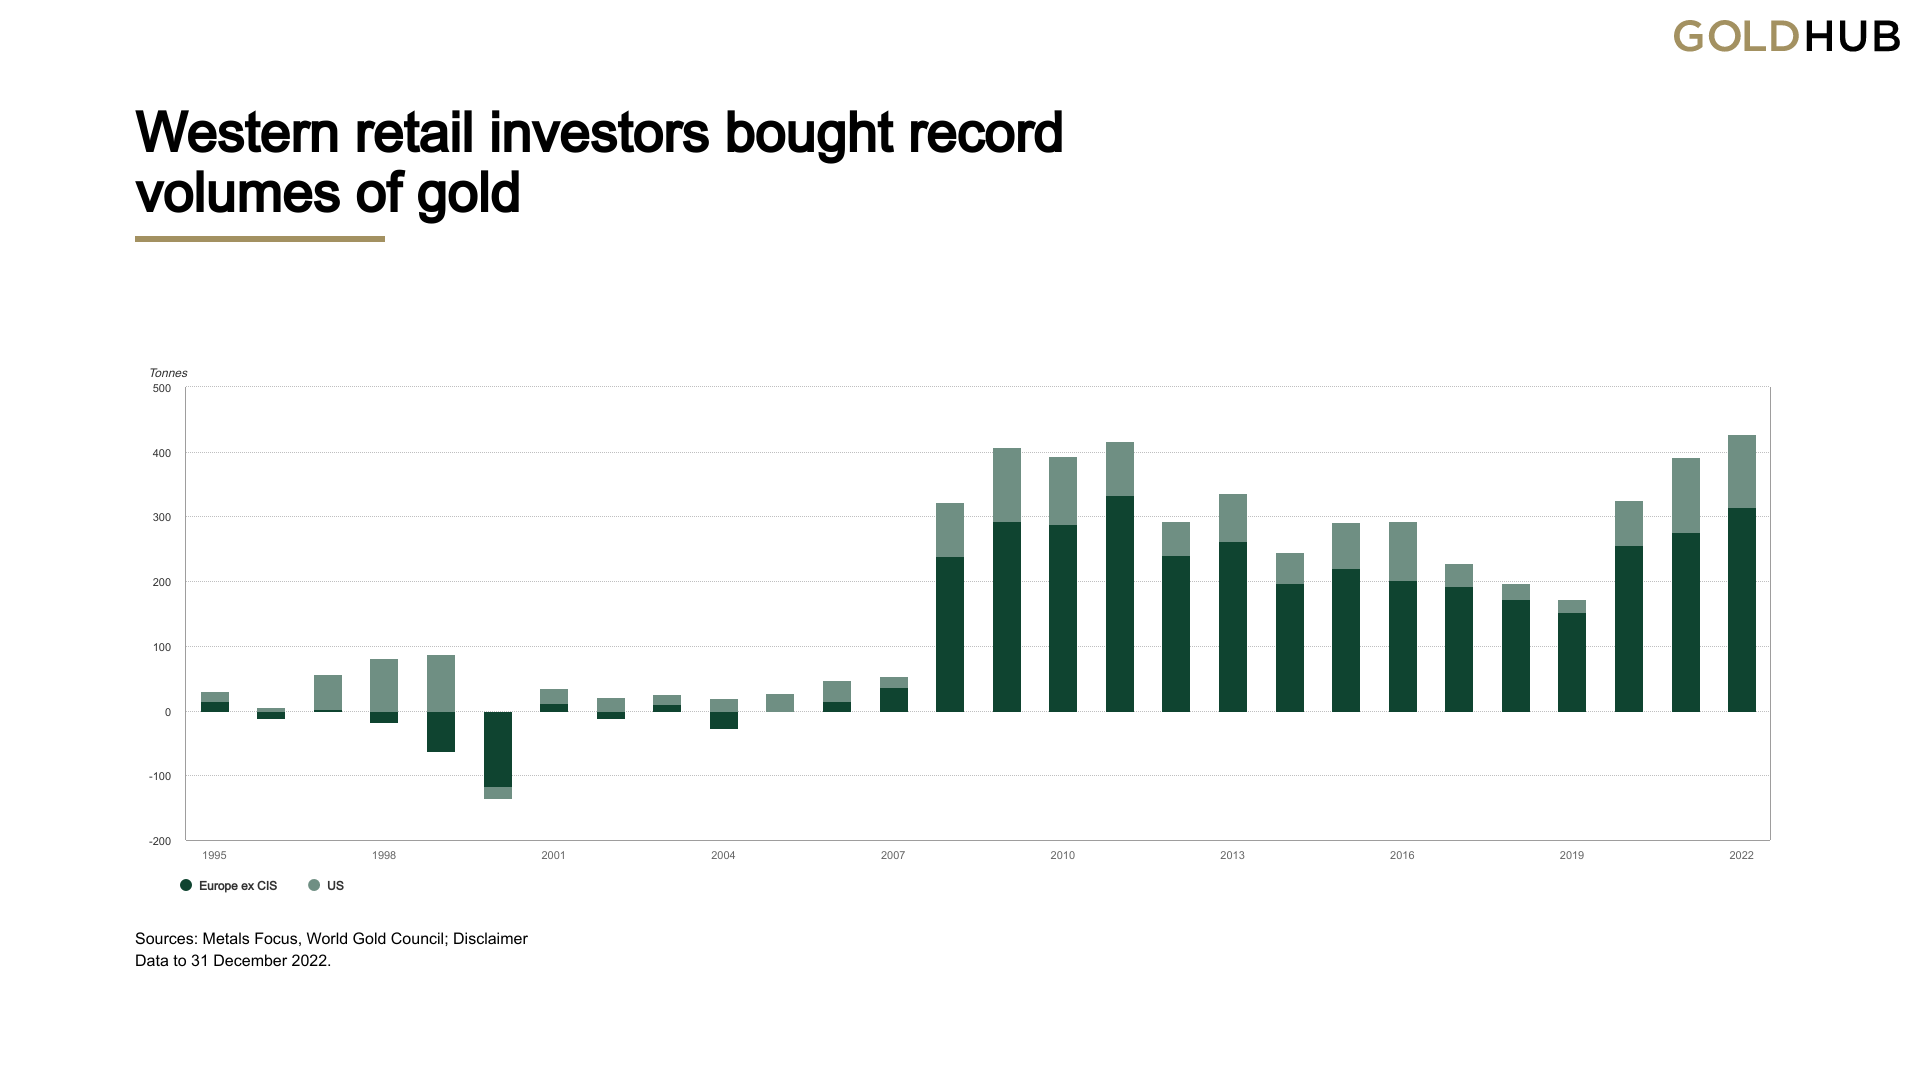 Western retail investors gold volumes